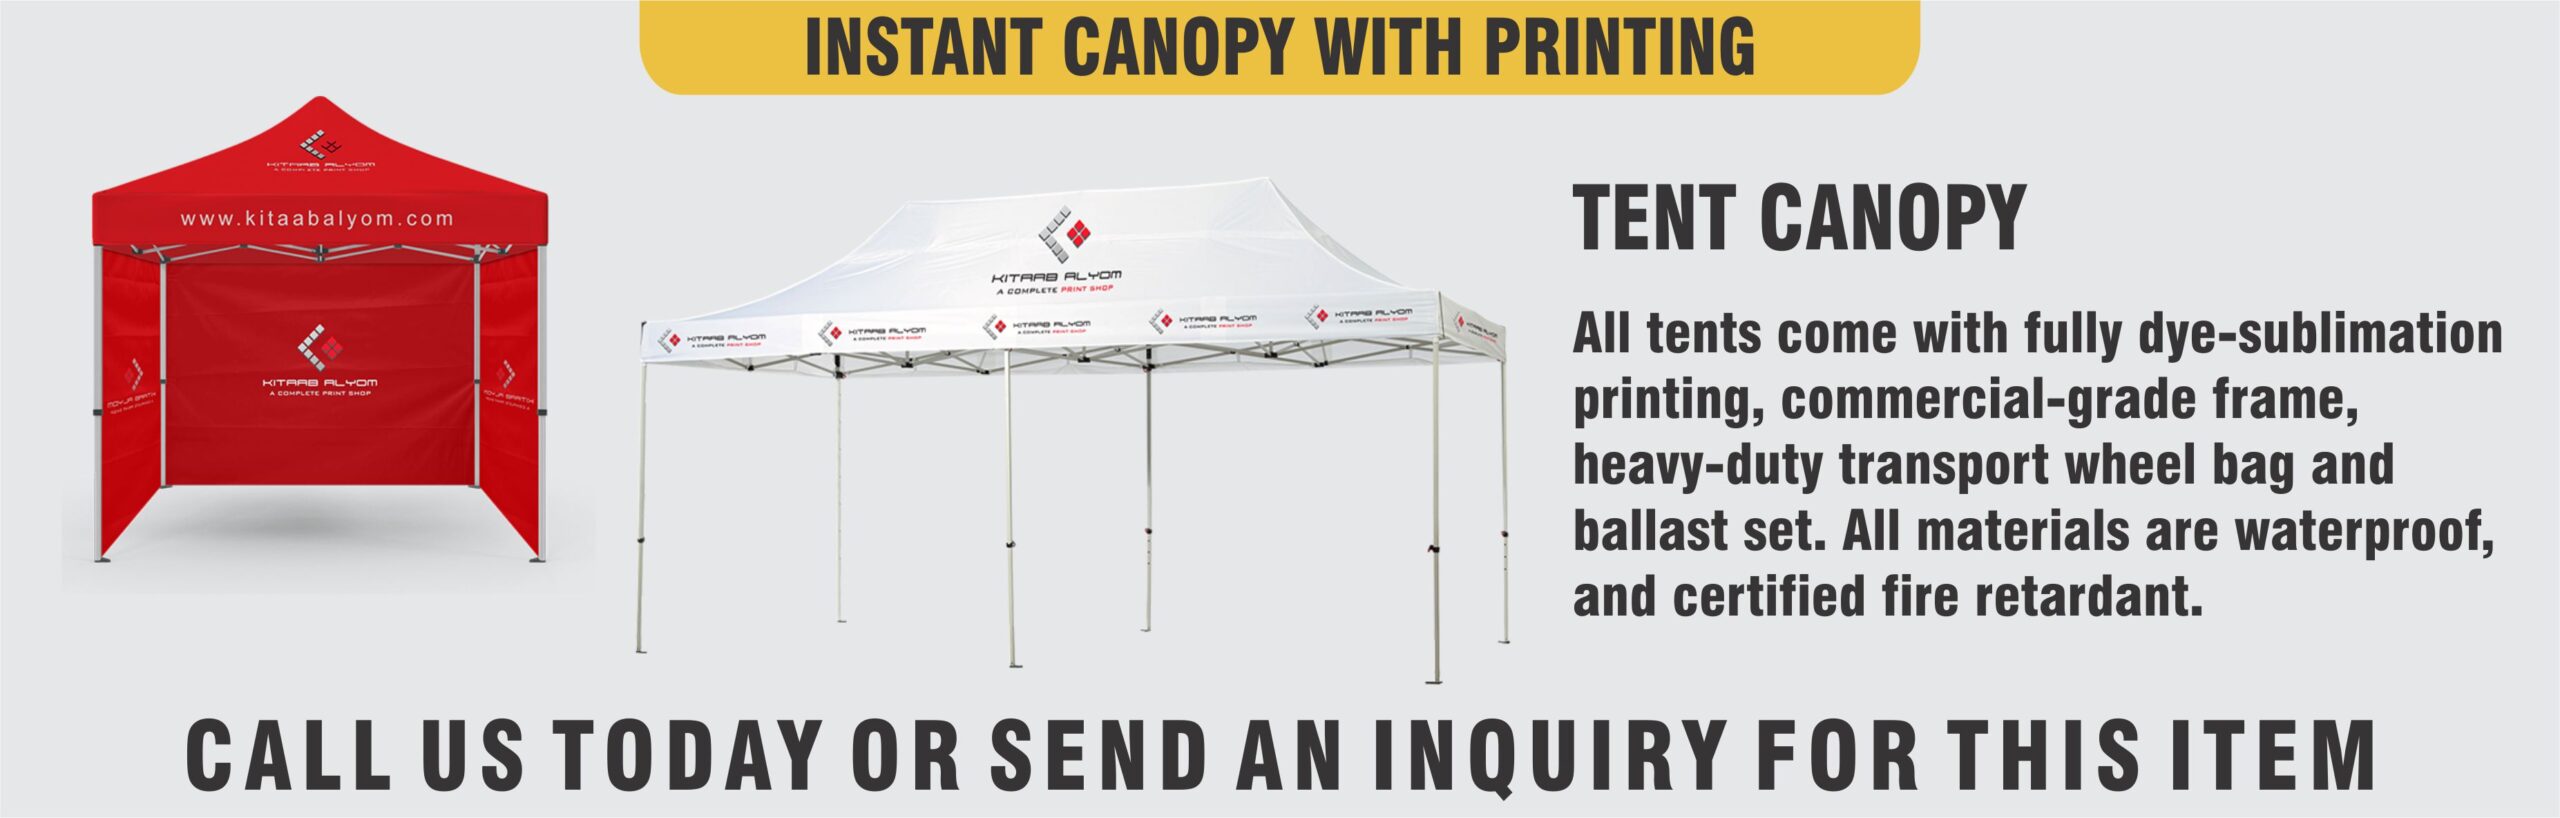 Customized Instant Canopy Dubai, Canopies, Gazebo printing in Dubai, Abu Dhabi & UAE